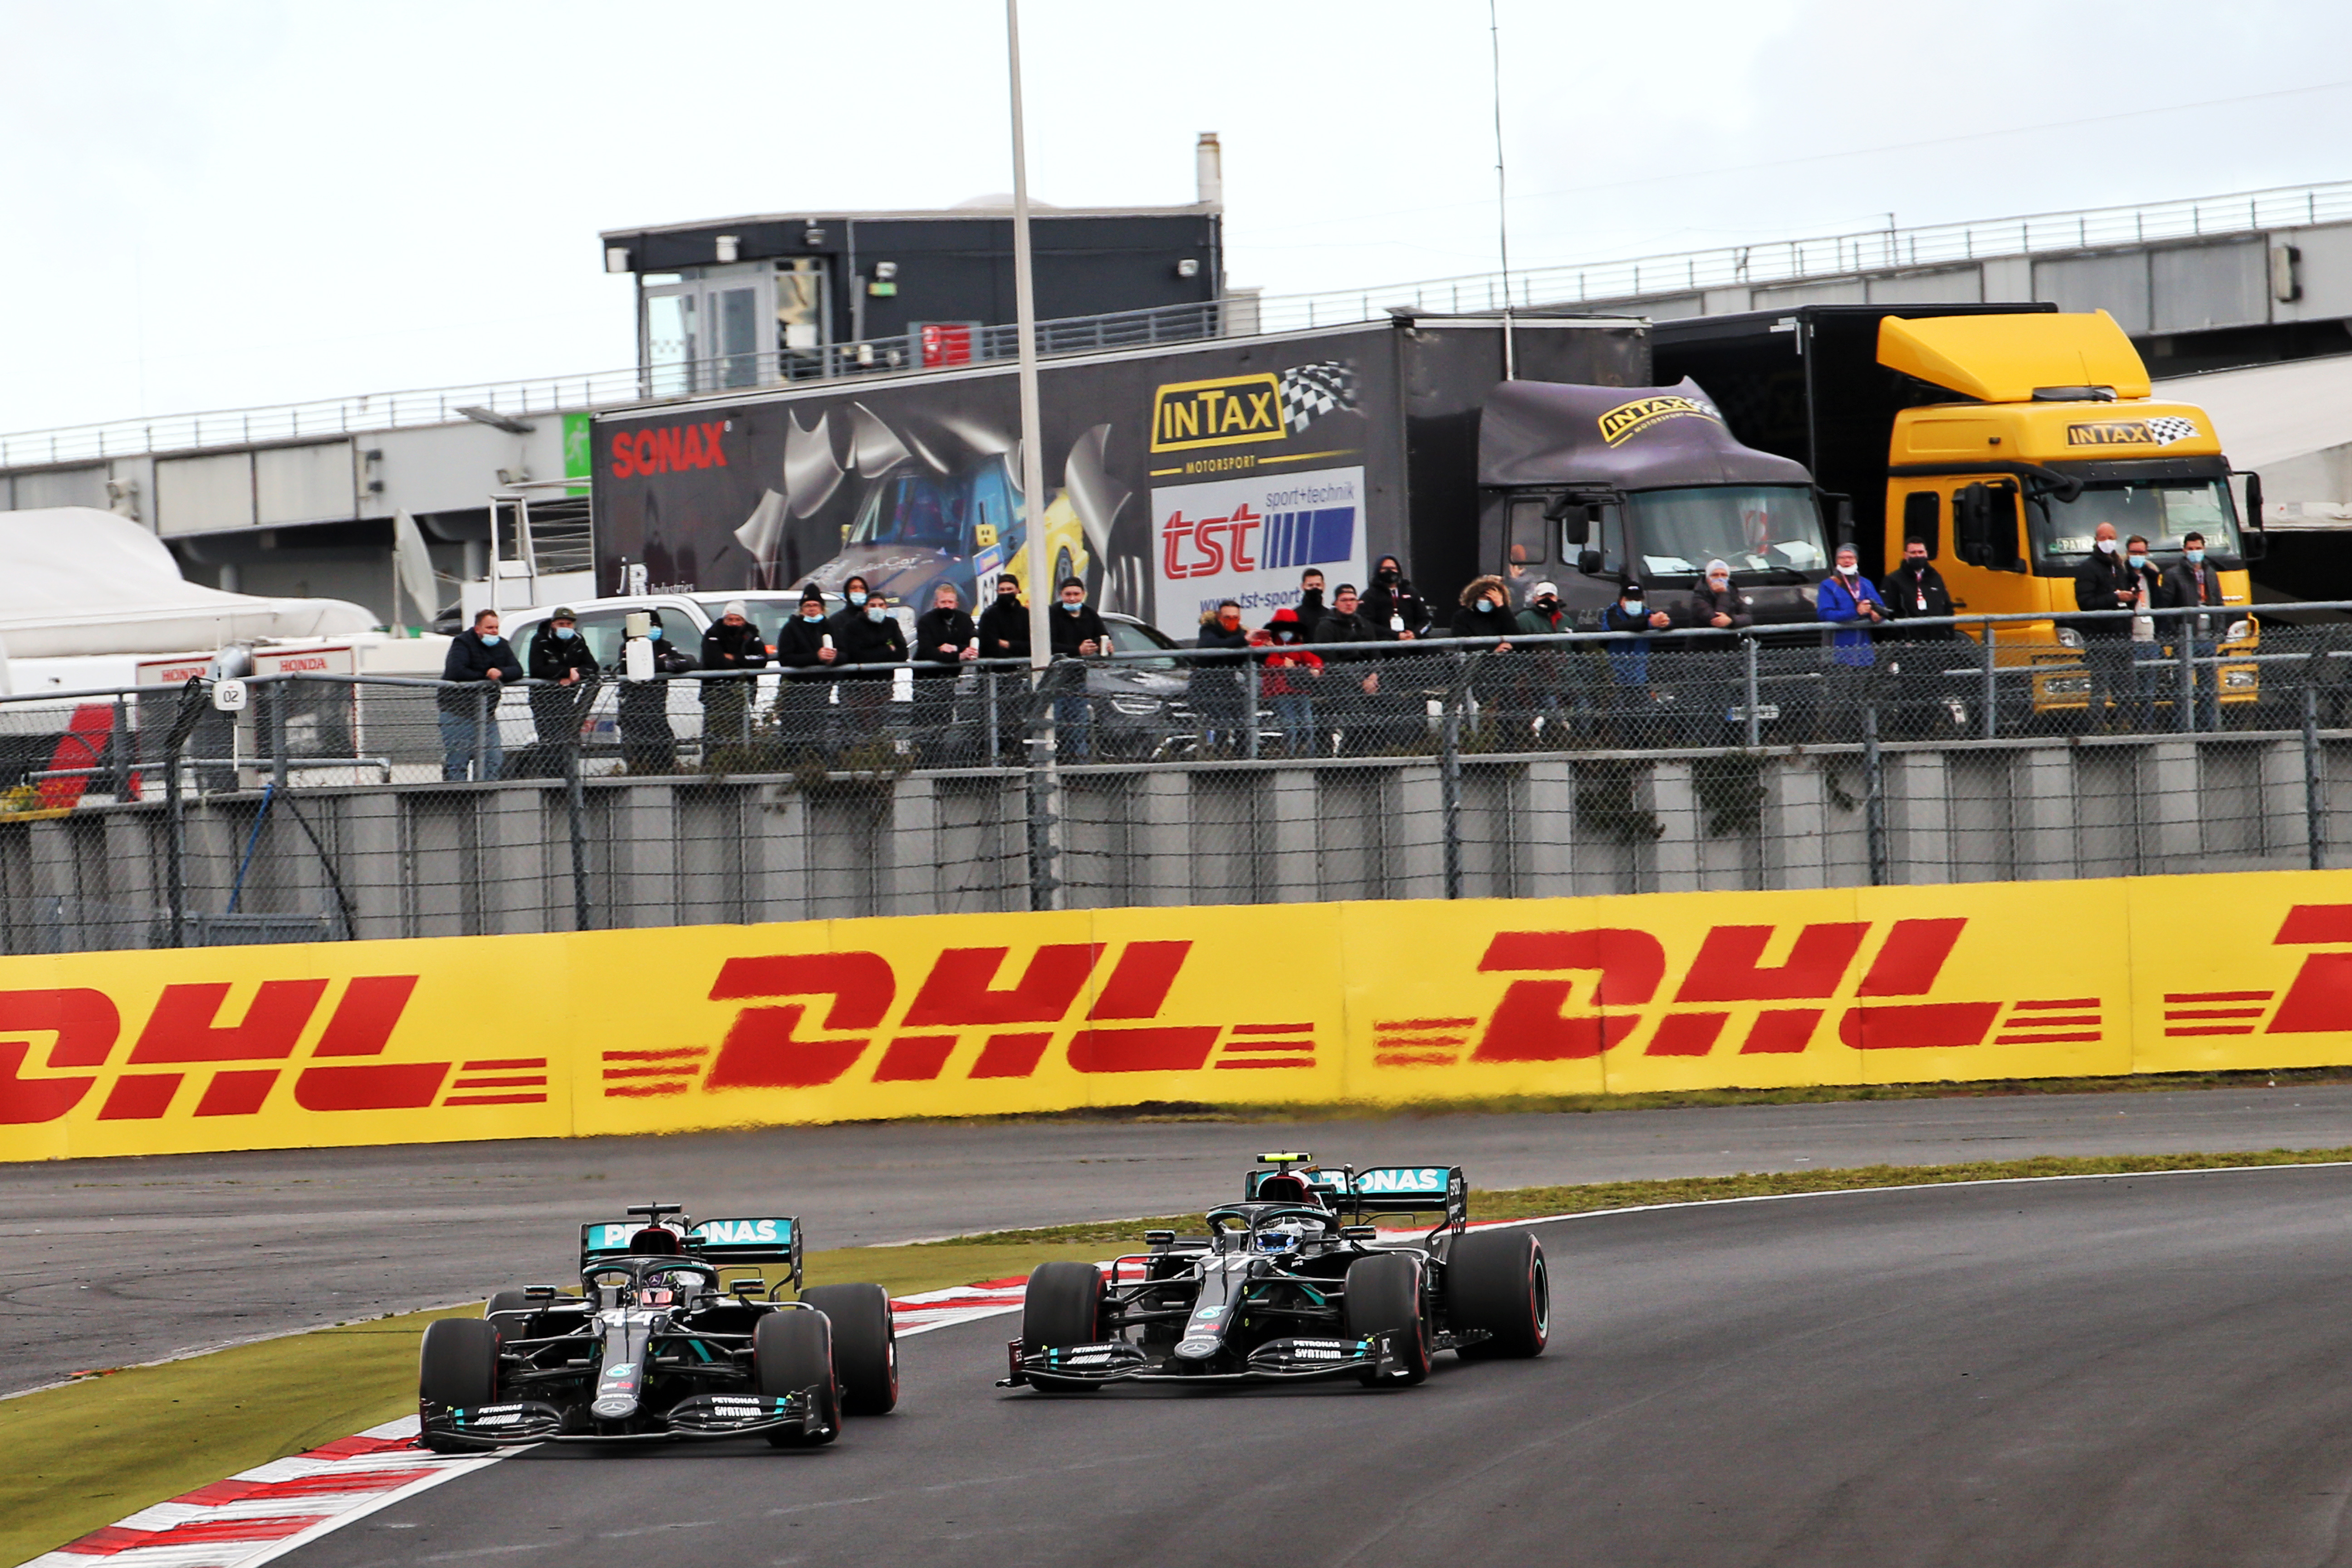 Lewis Hamilton Valtteri Bottas Mercedes Eifel Grand Prix 2020 Nurburgring